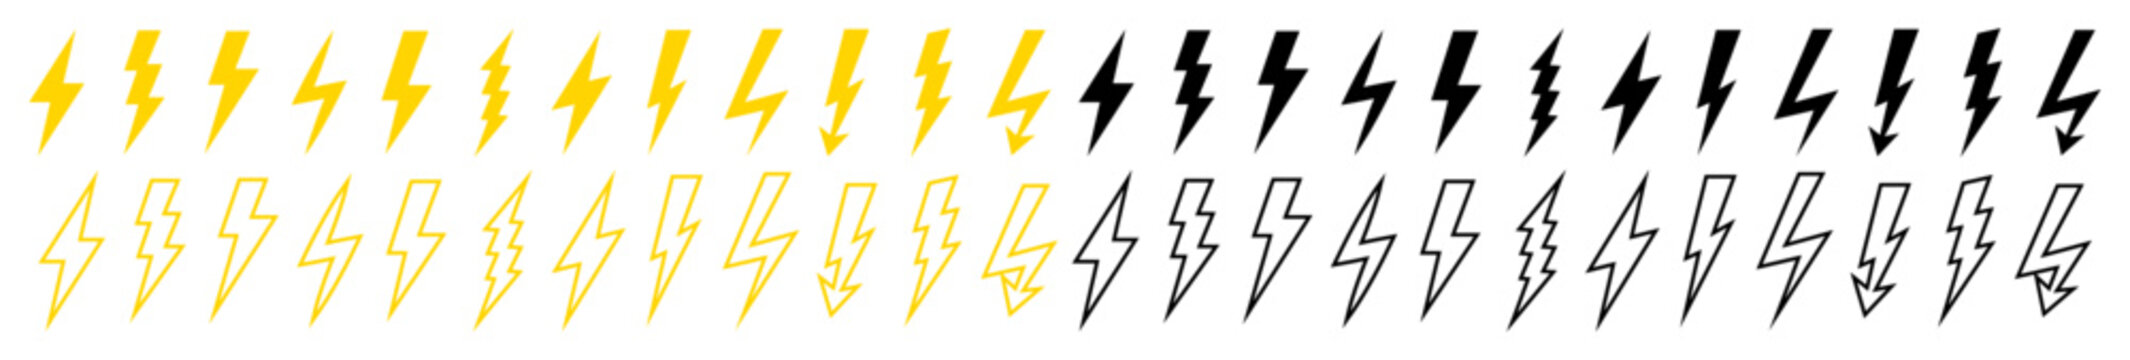 Bolt, lighting thunder vector icons. Thunderbolt electric energy flash arrow symbols. Signs, logos of light, power, storm. Flat yellow thunderstorm strikes illustration. Shock voltage cartoon graphic.